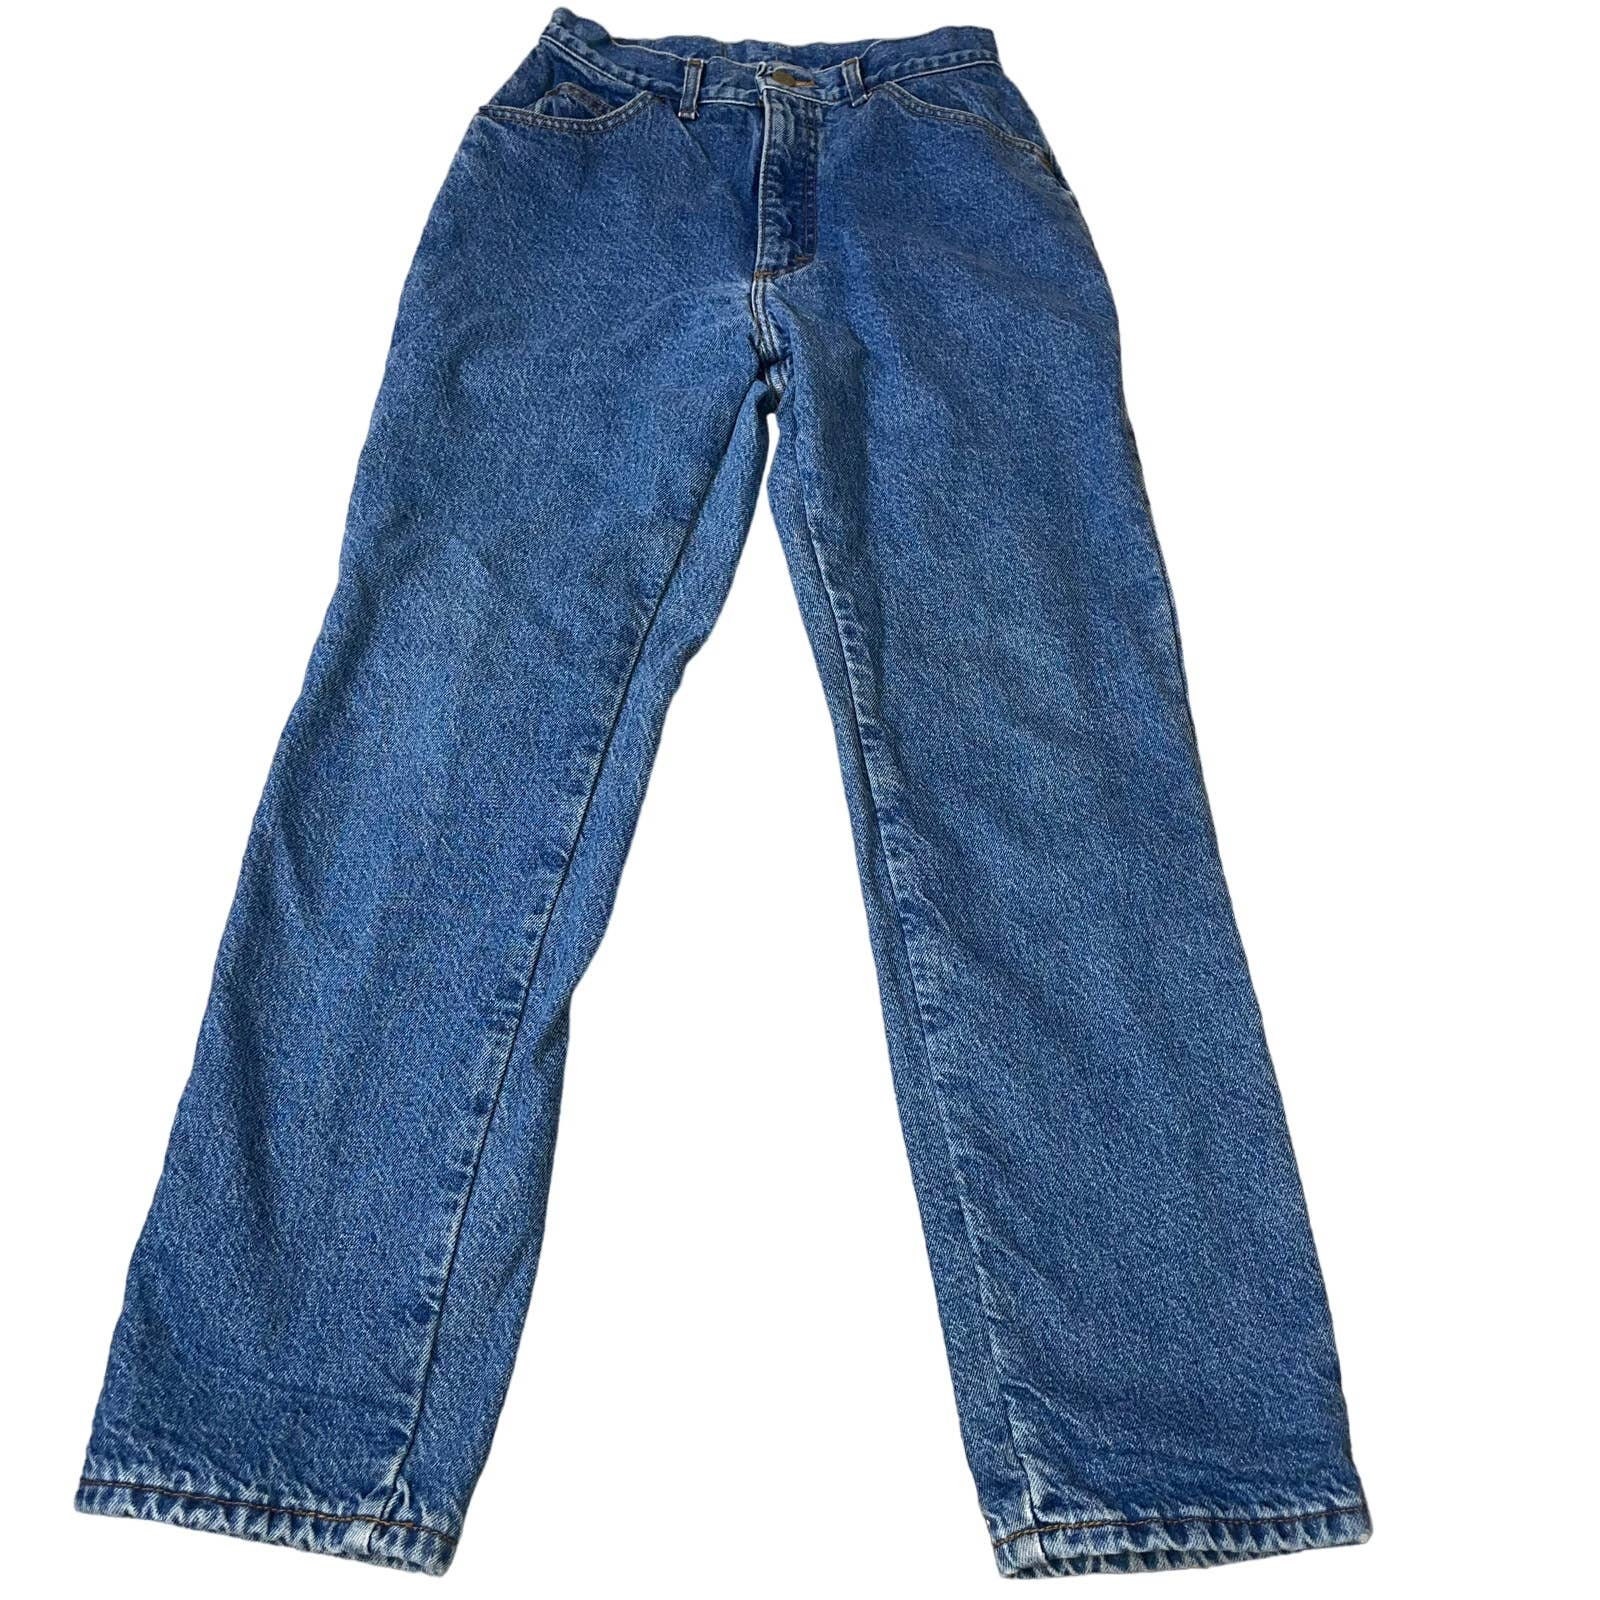 Buy Fleece Lined Jeans Online In India -  India